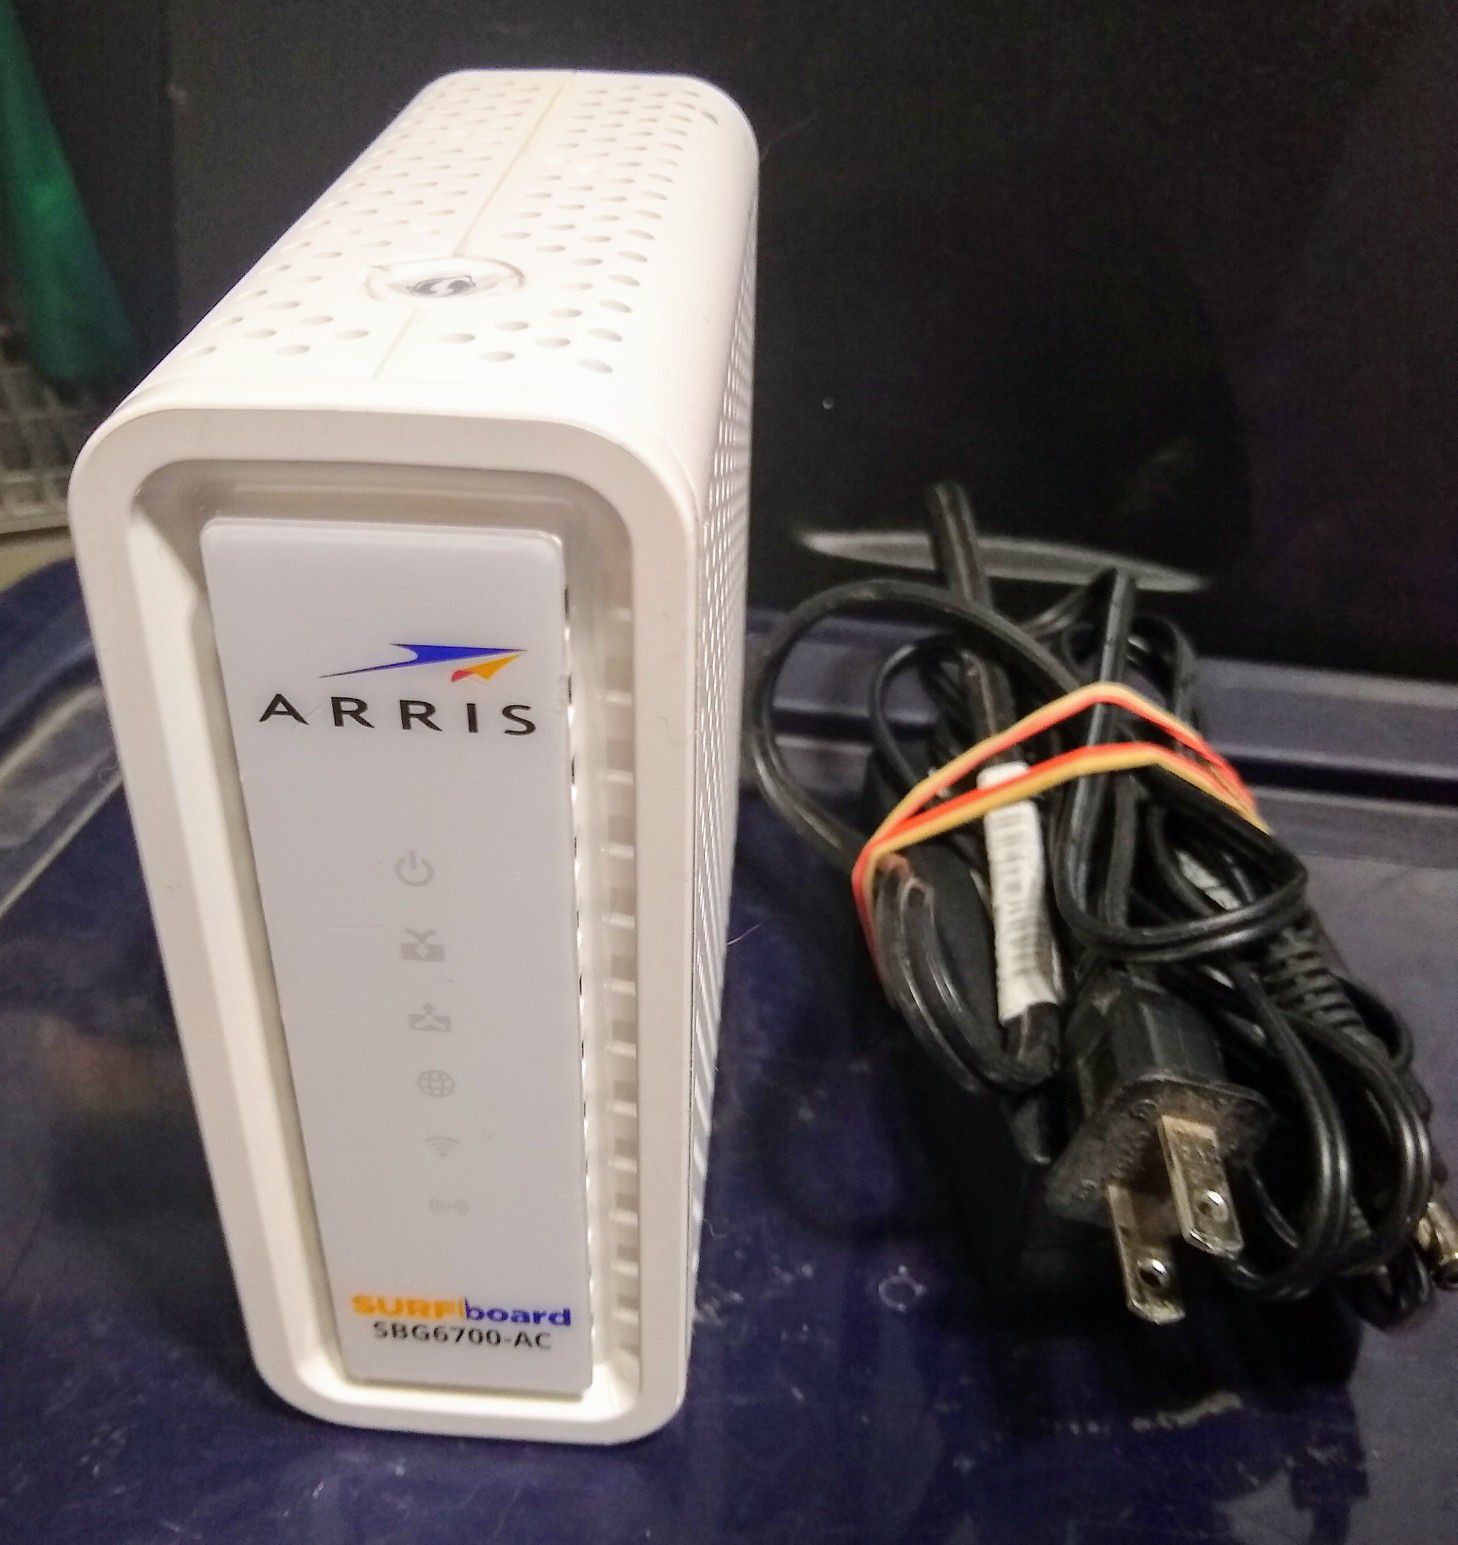 Arris SBG6700-AC Cable Modem & Router